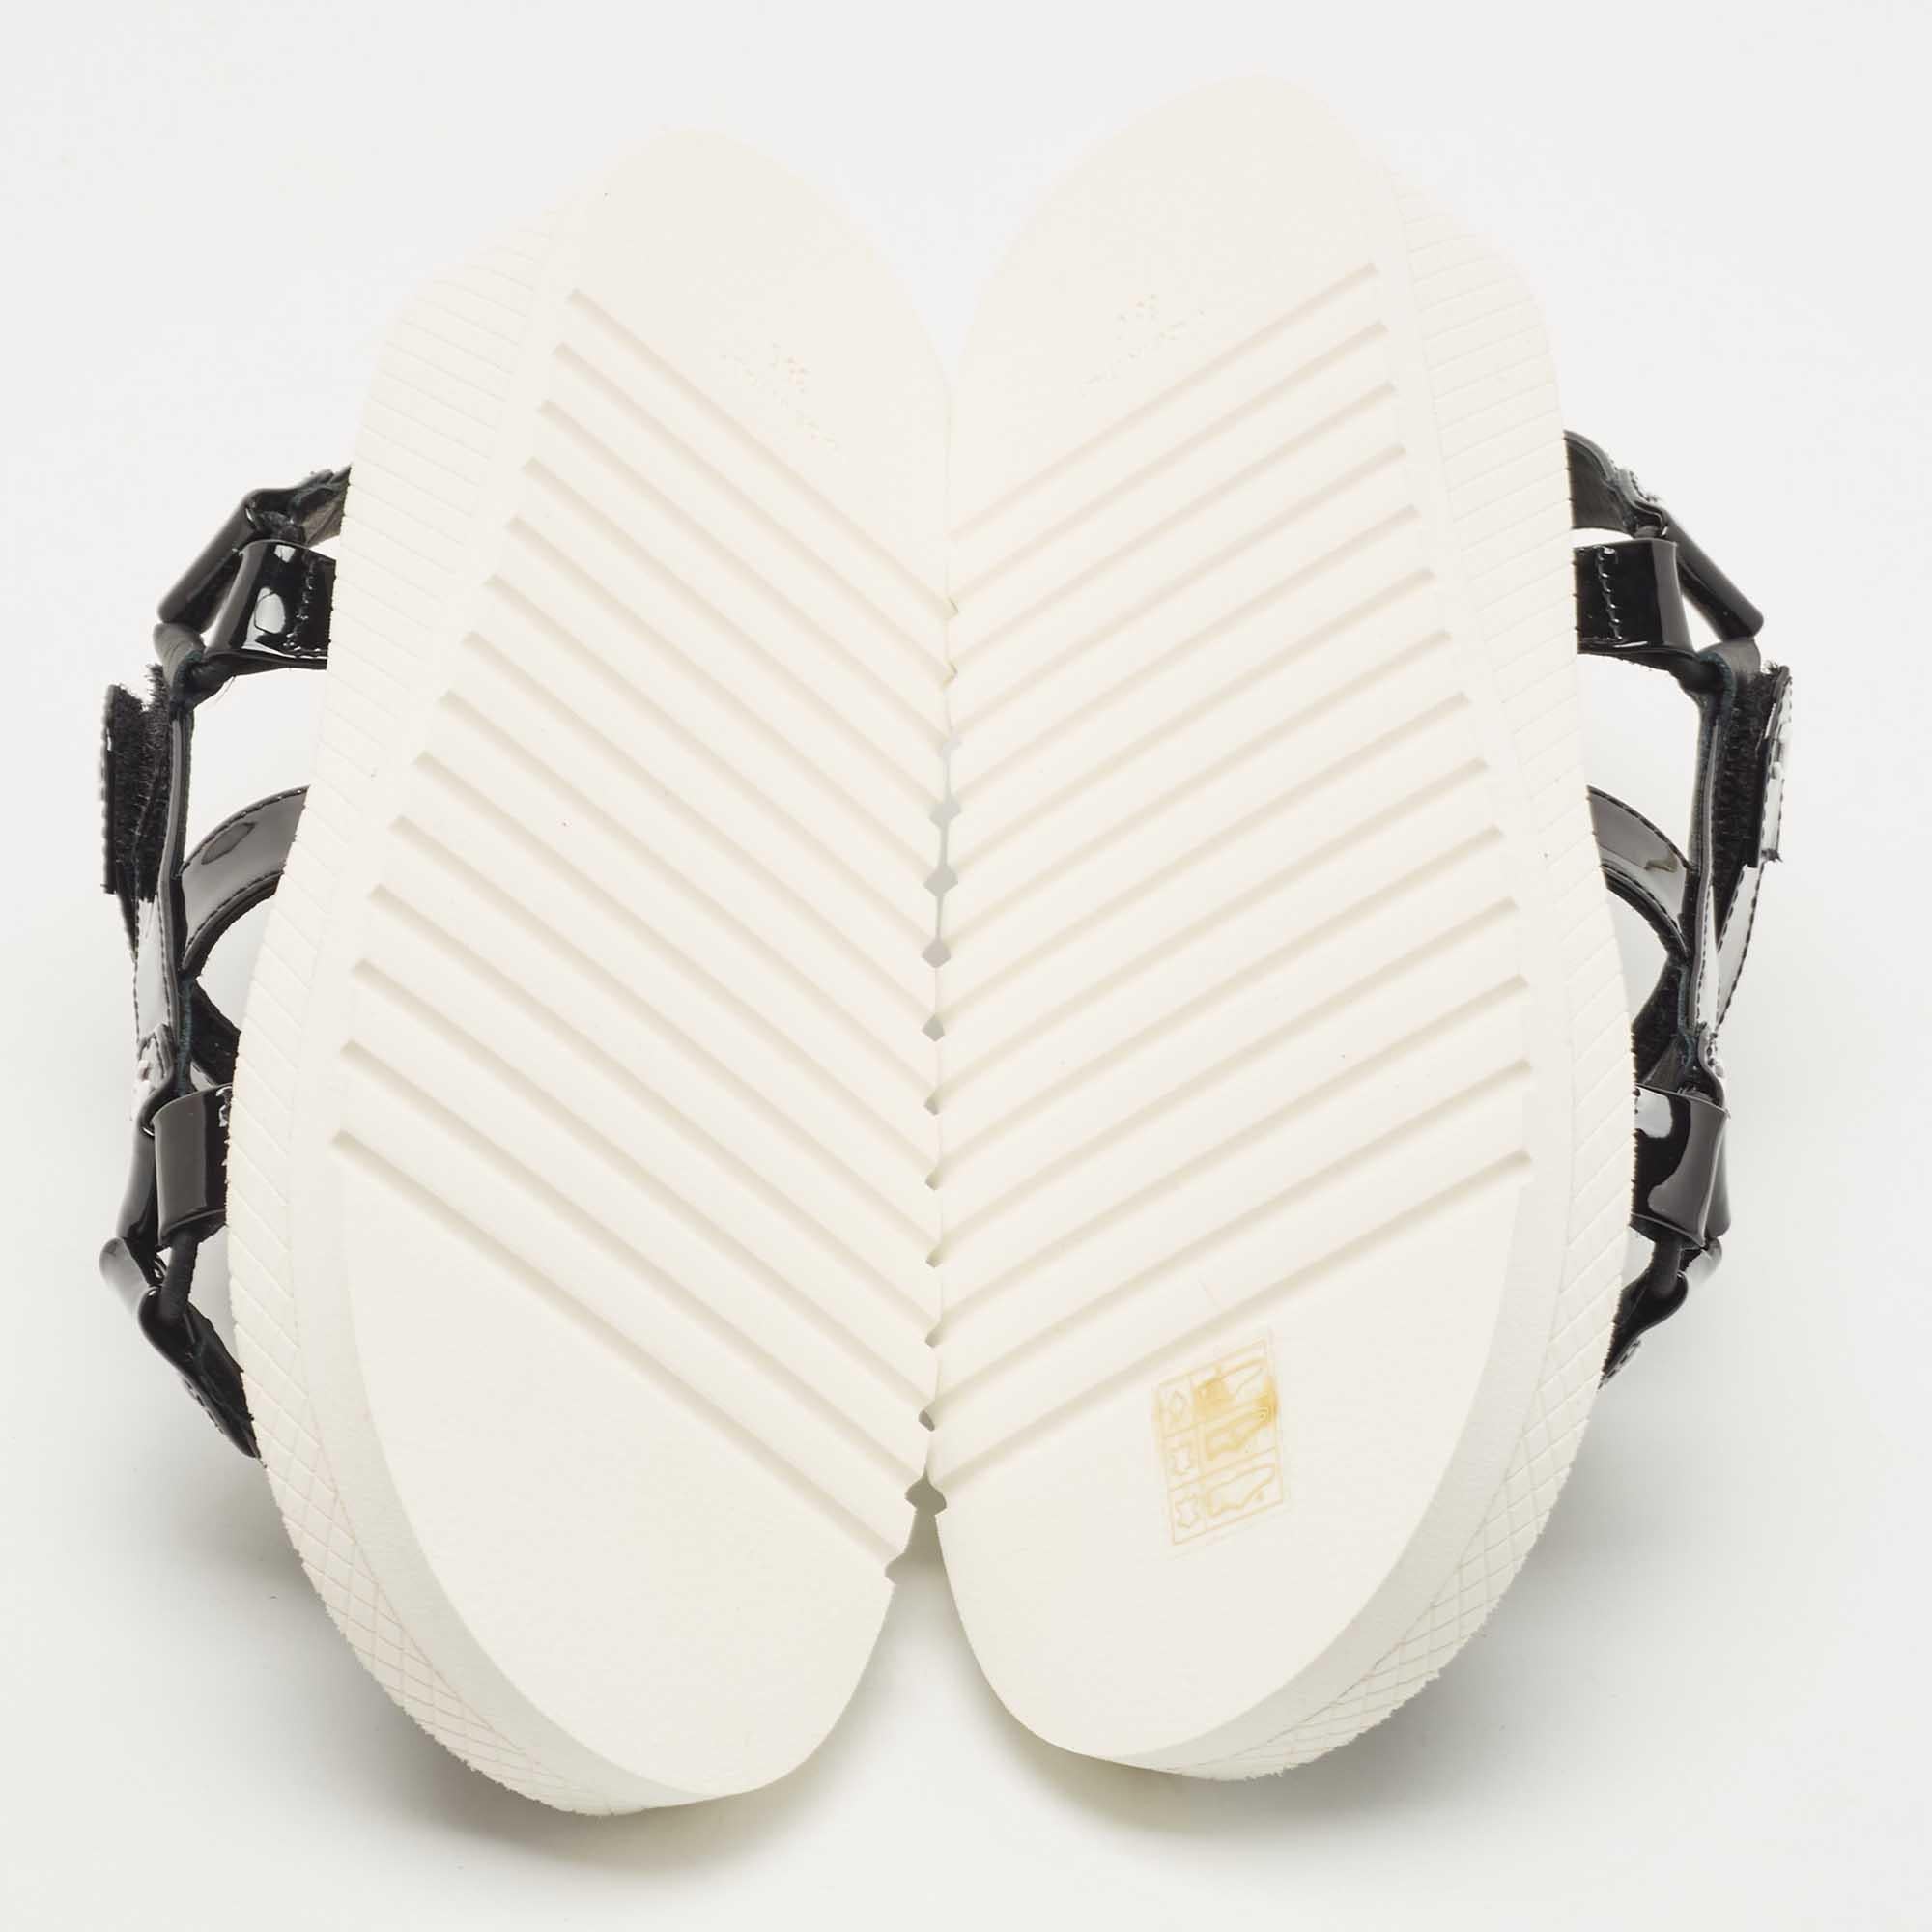 Chanel Black Patent Leather CC Velcro Strap Sandals Size 36 4